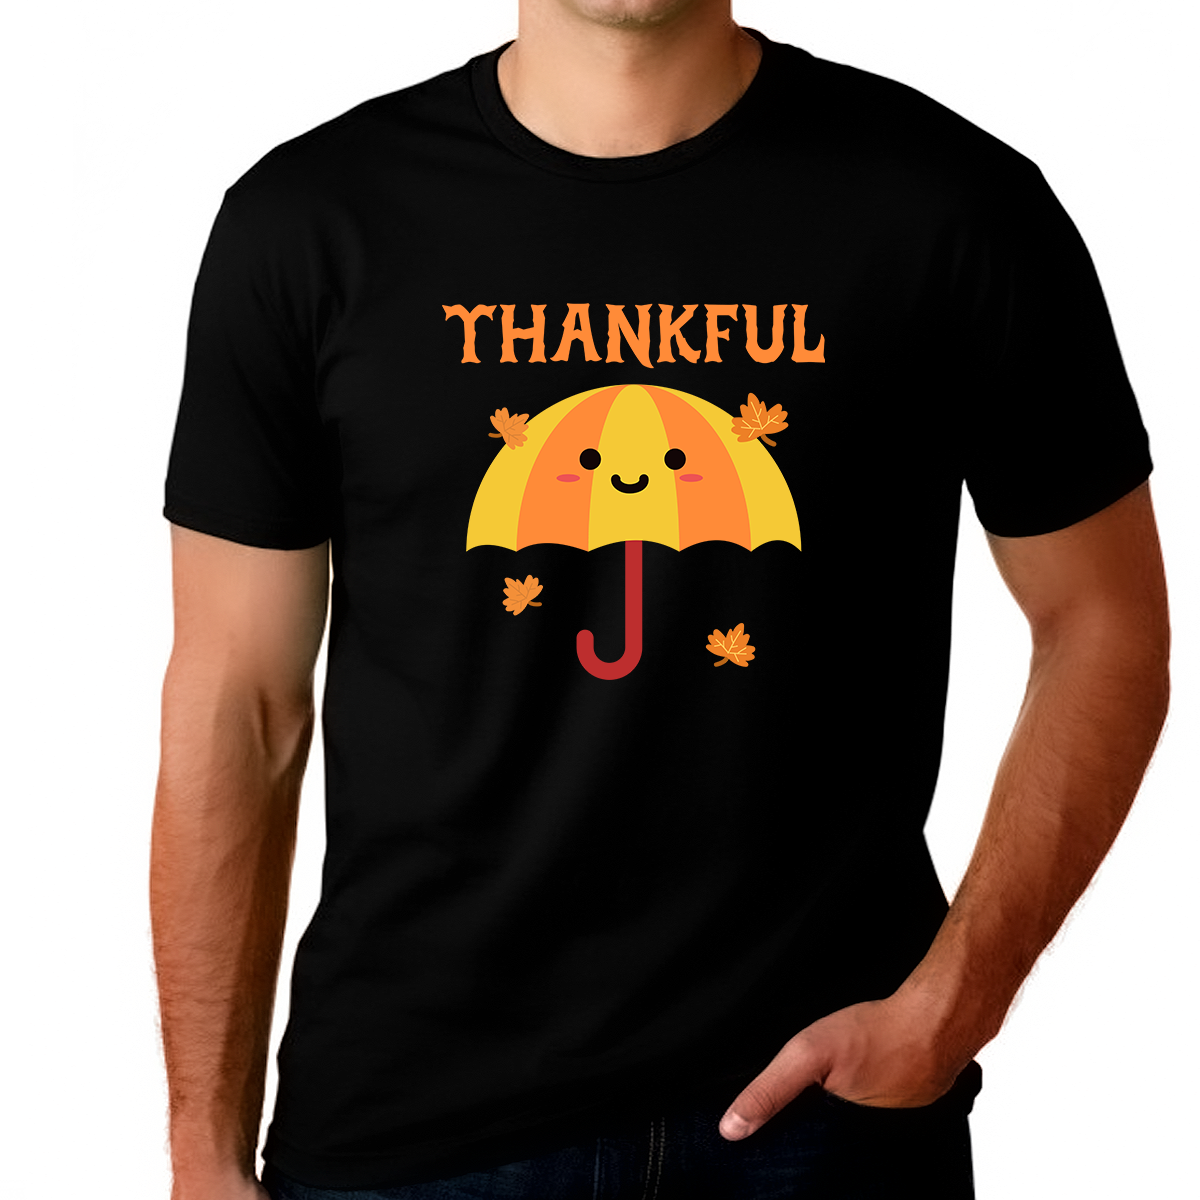 Mens Thanksgiving Shirt Plus Size Fall Shirt Big and Tall Thanksgiving Shirts for Men XL 2XL 3XL 4XL 5XL